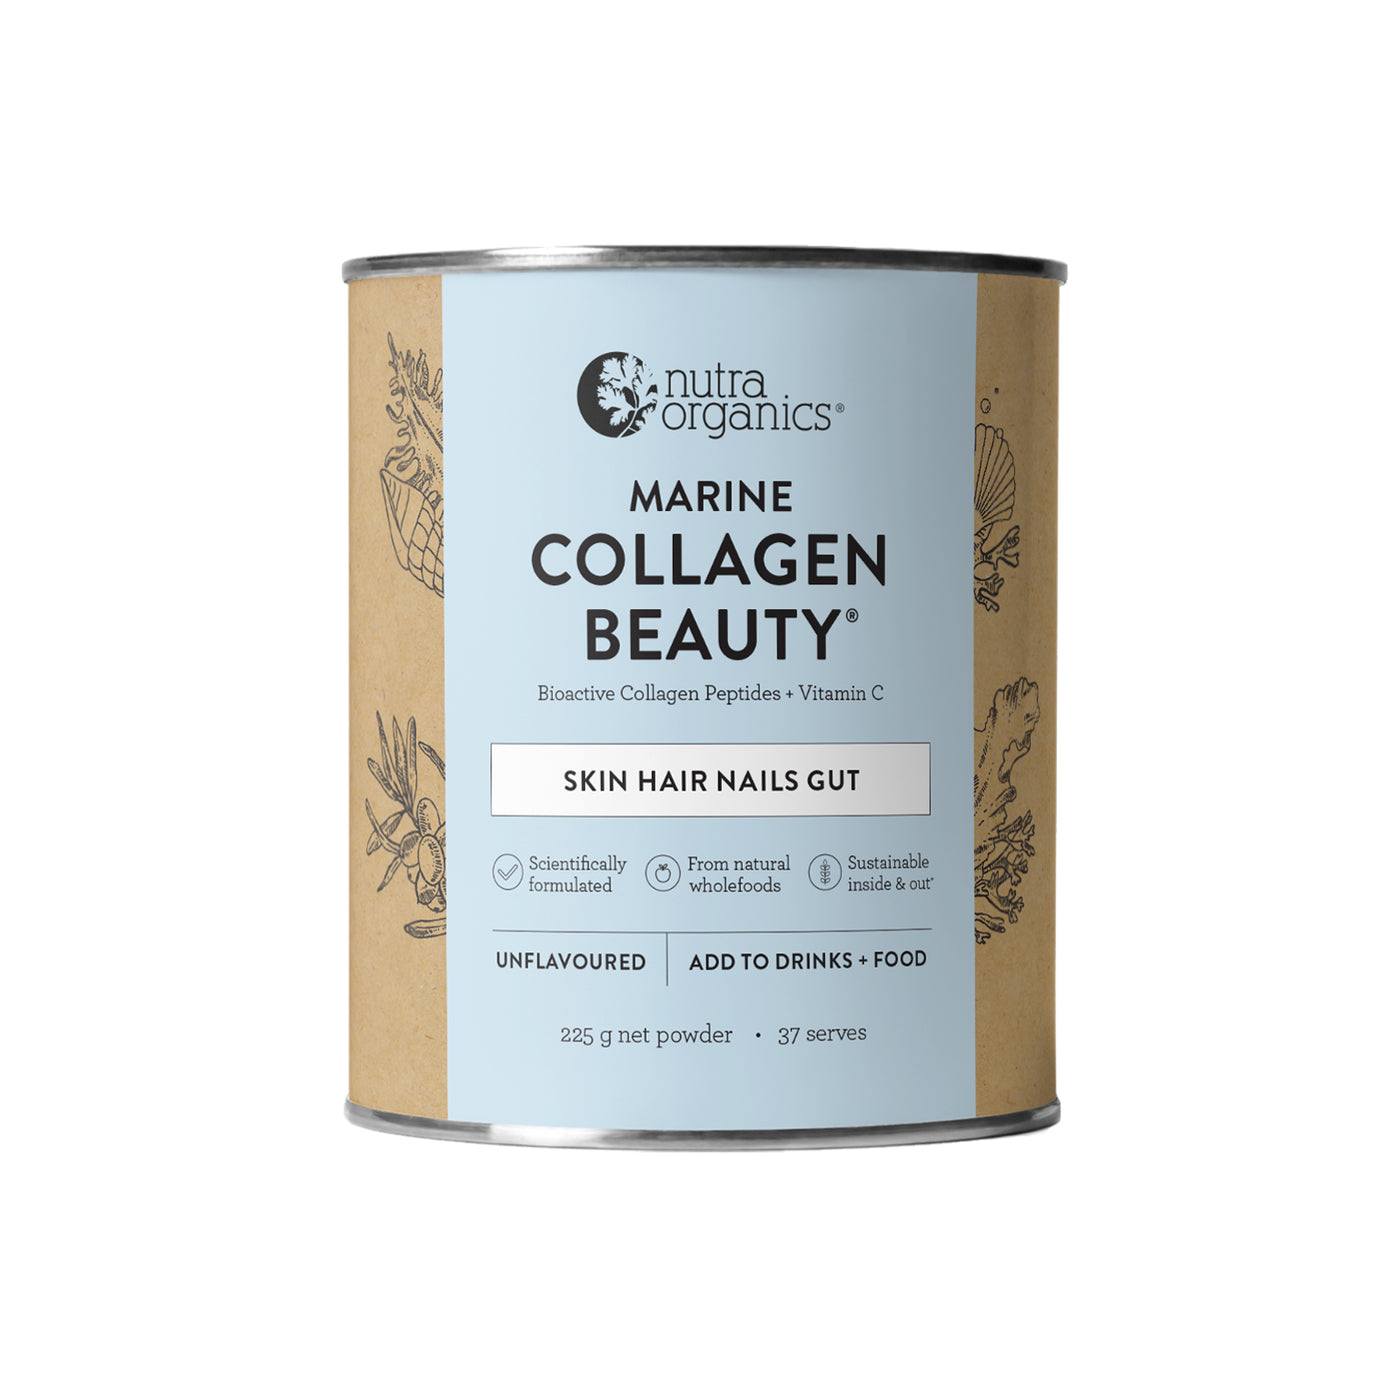 Nutra Organics Marine Collagen Beauty (225g)